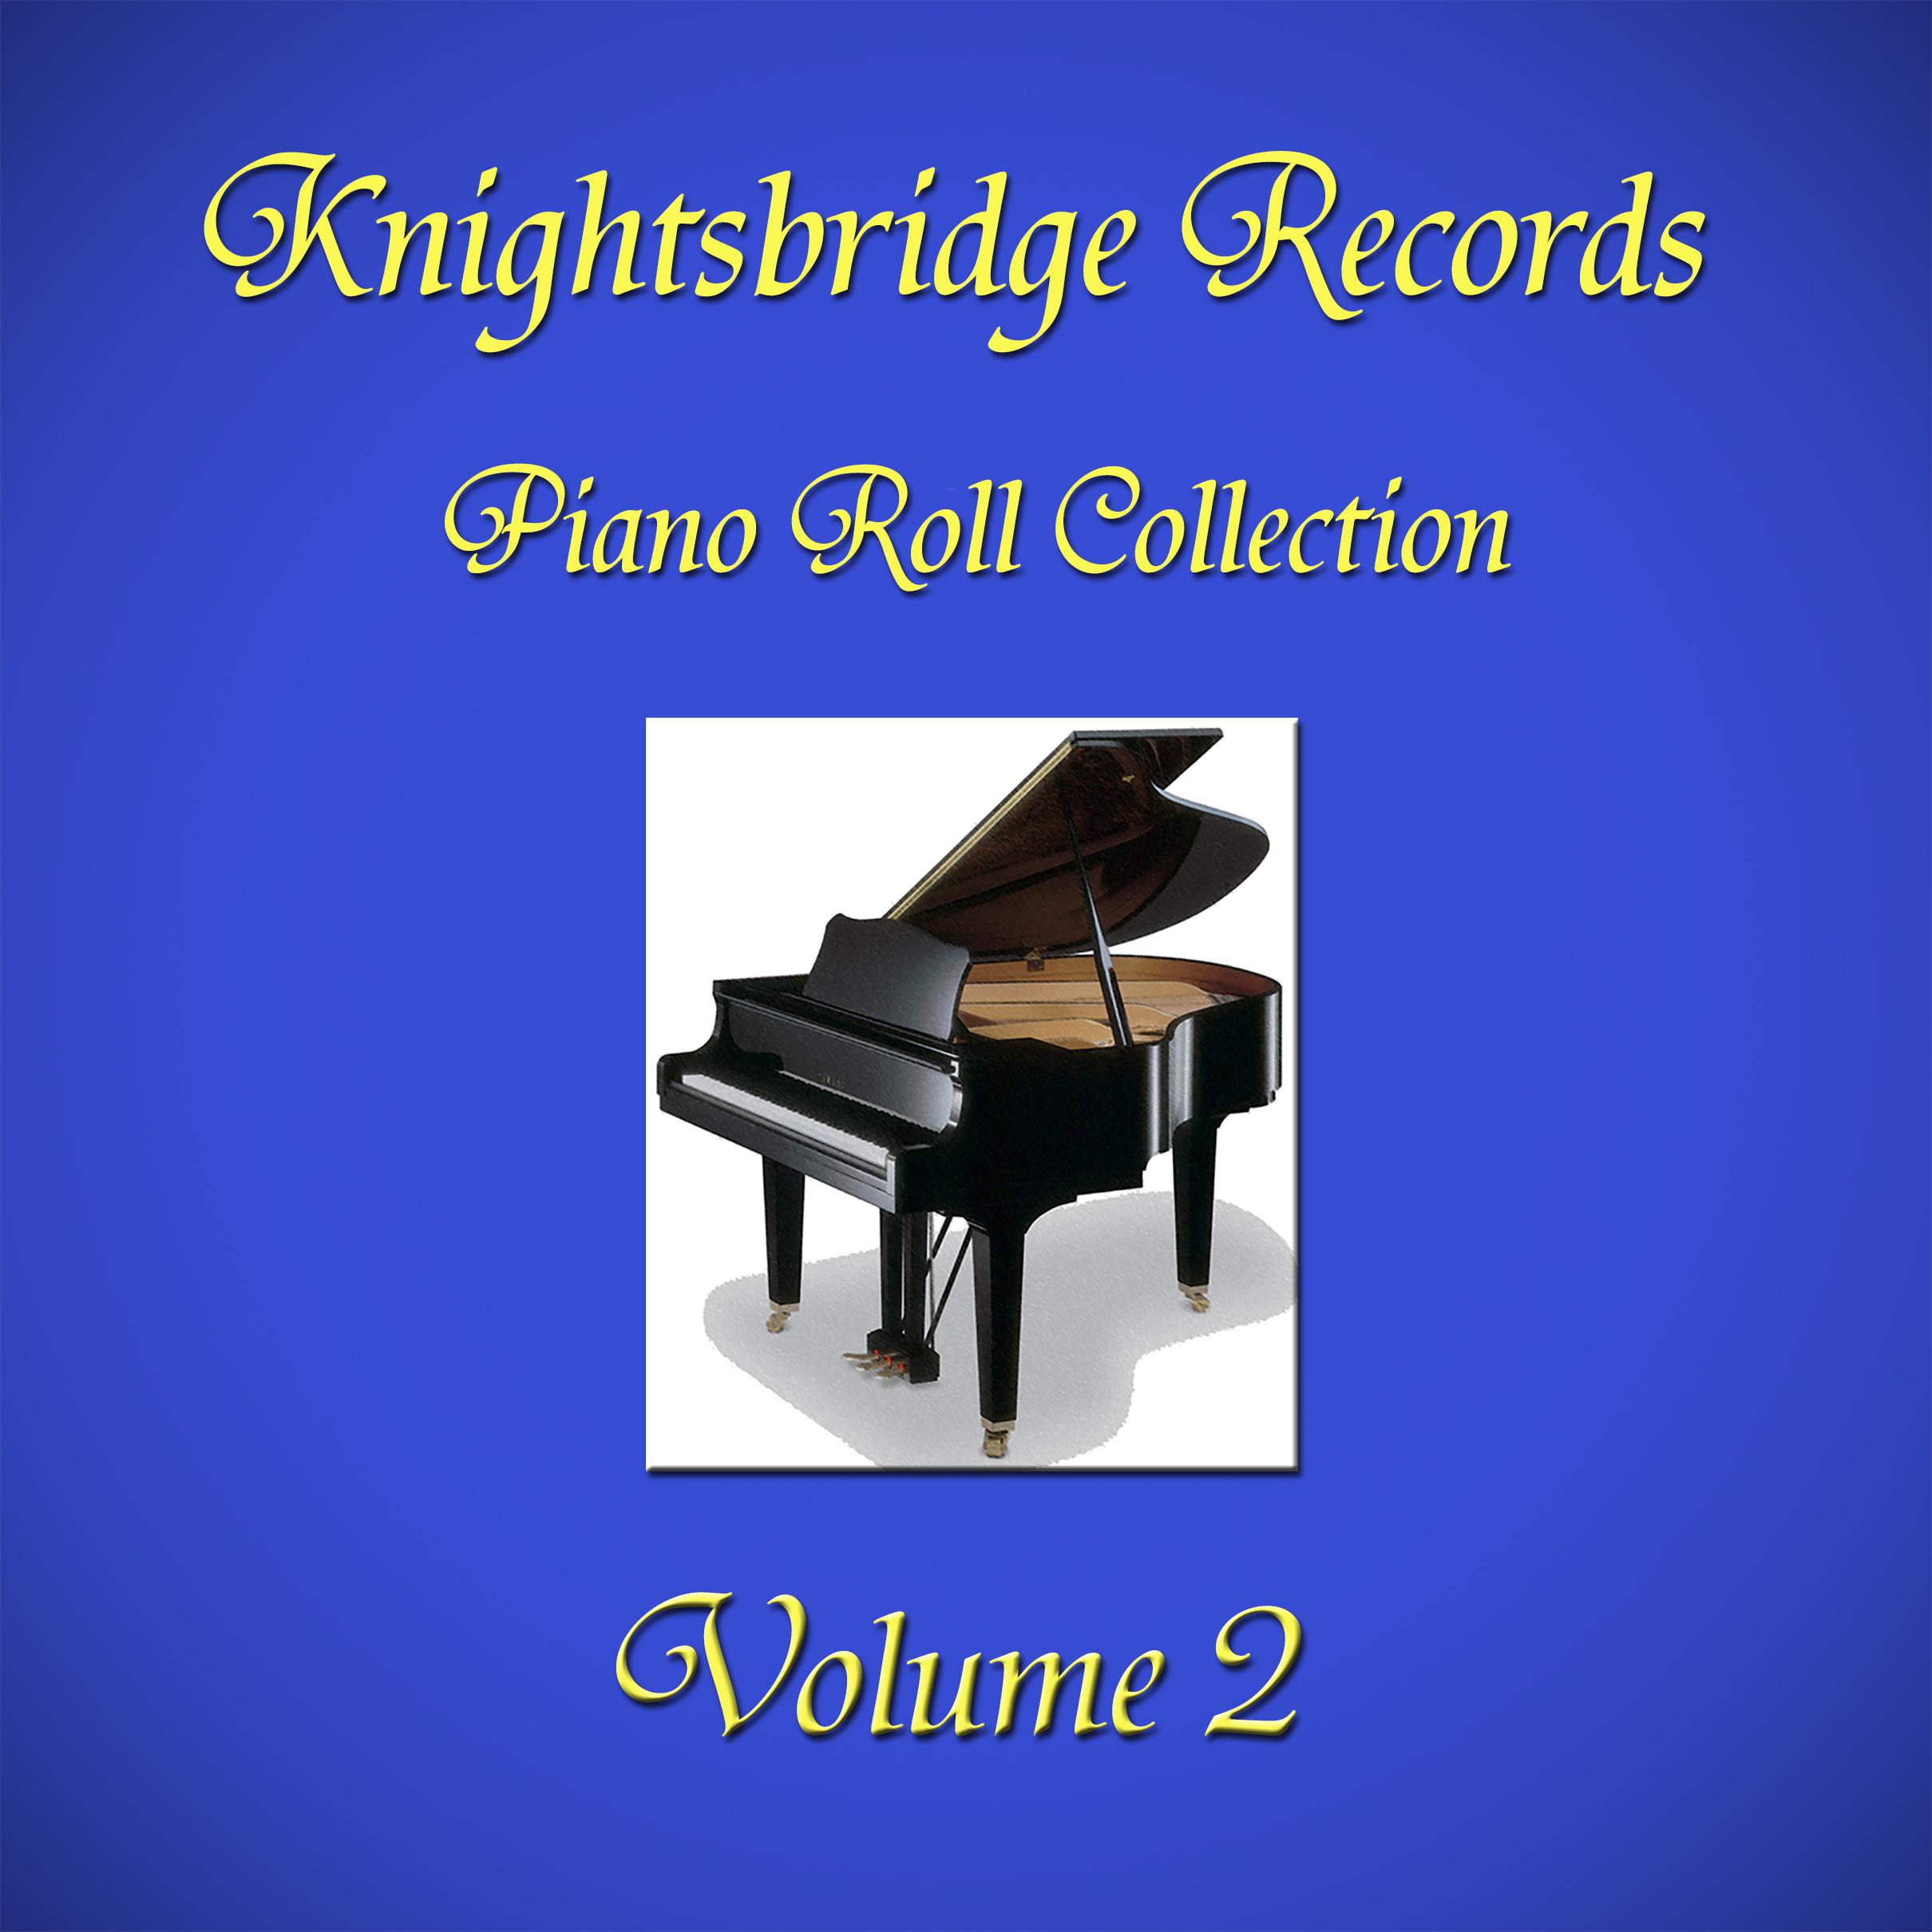 Knightsbridge Records Piano Roll Collection Vol. 2